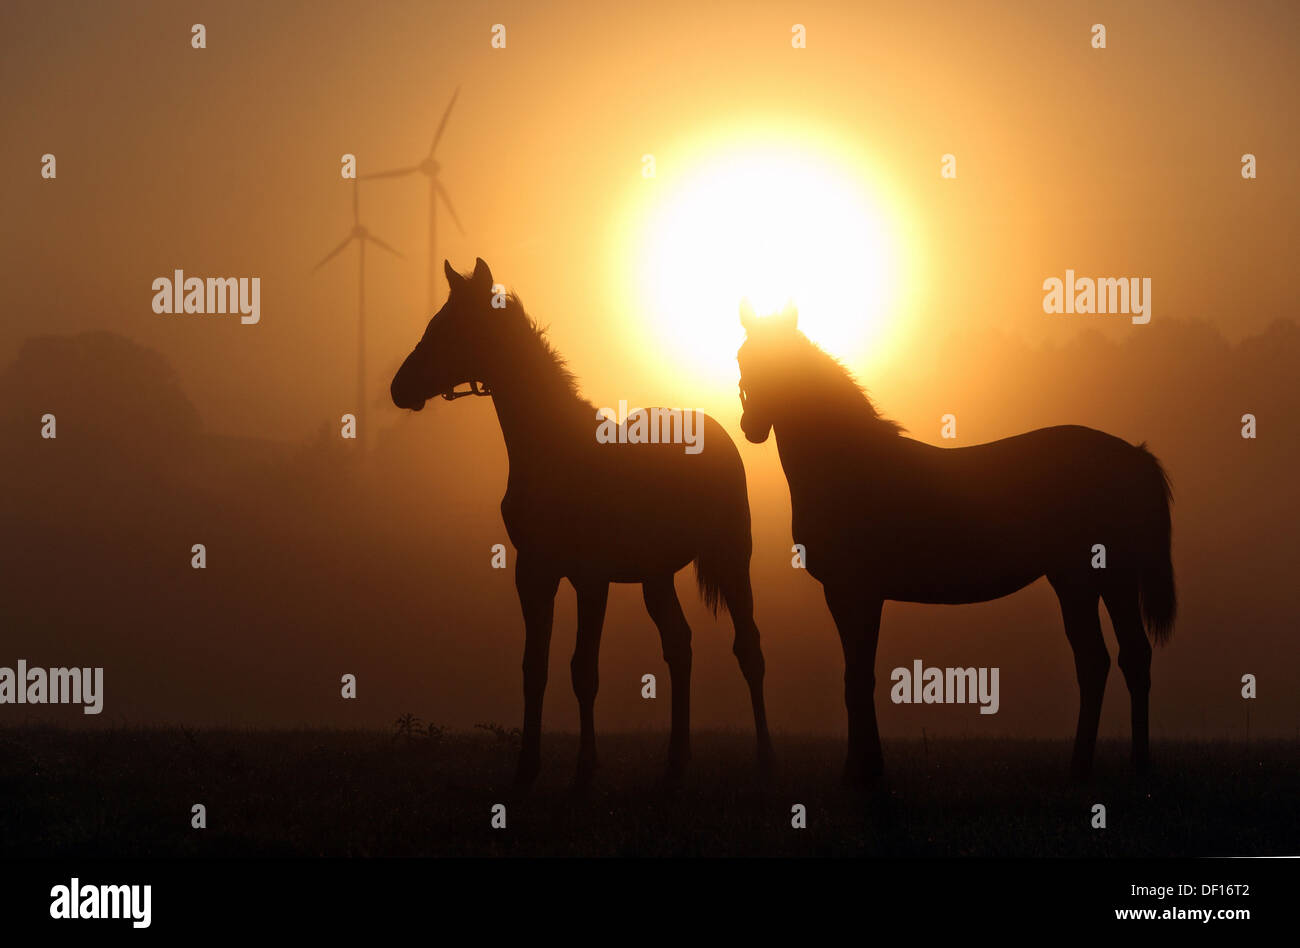 Görlsdorf, Germany, silhouettes of horses at sunrise Stock Photo